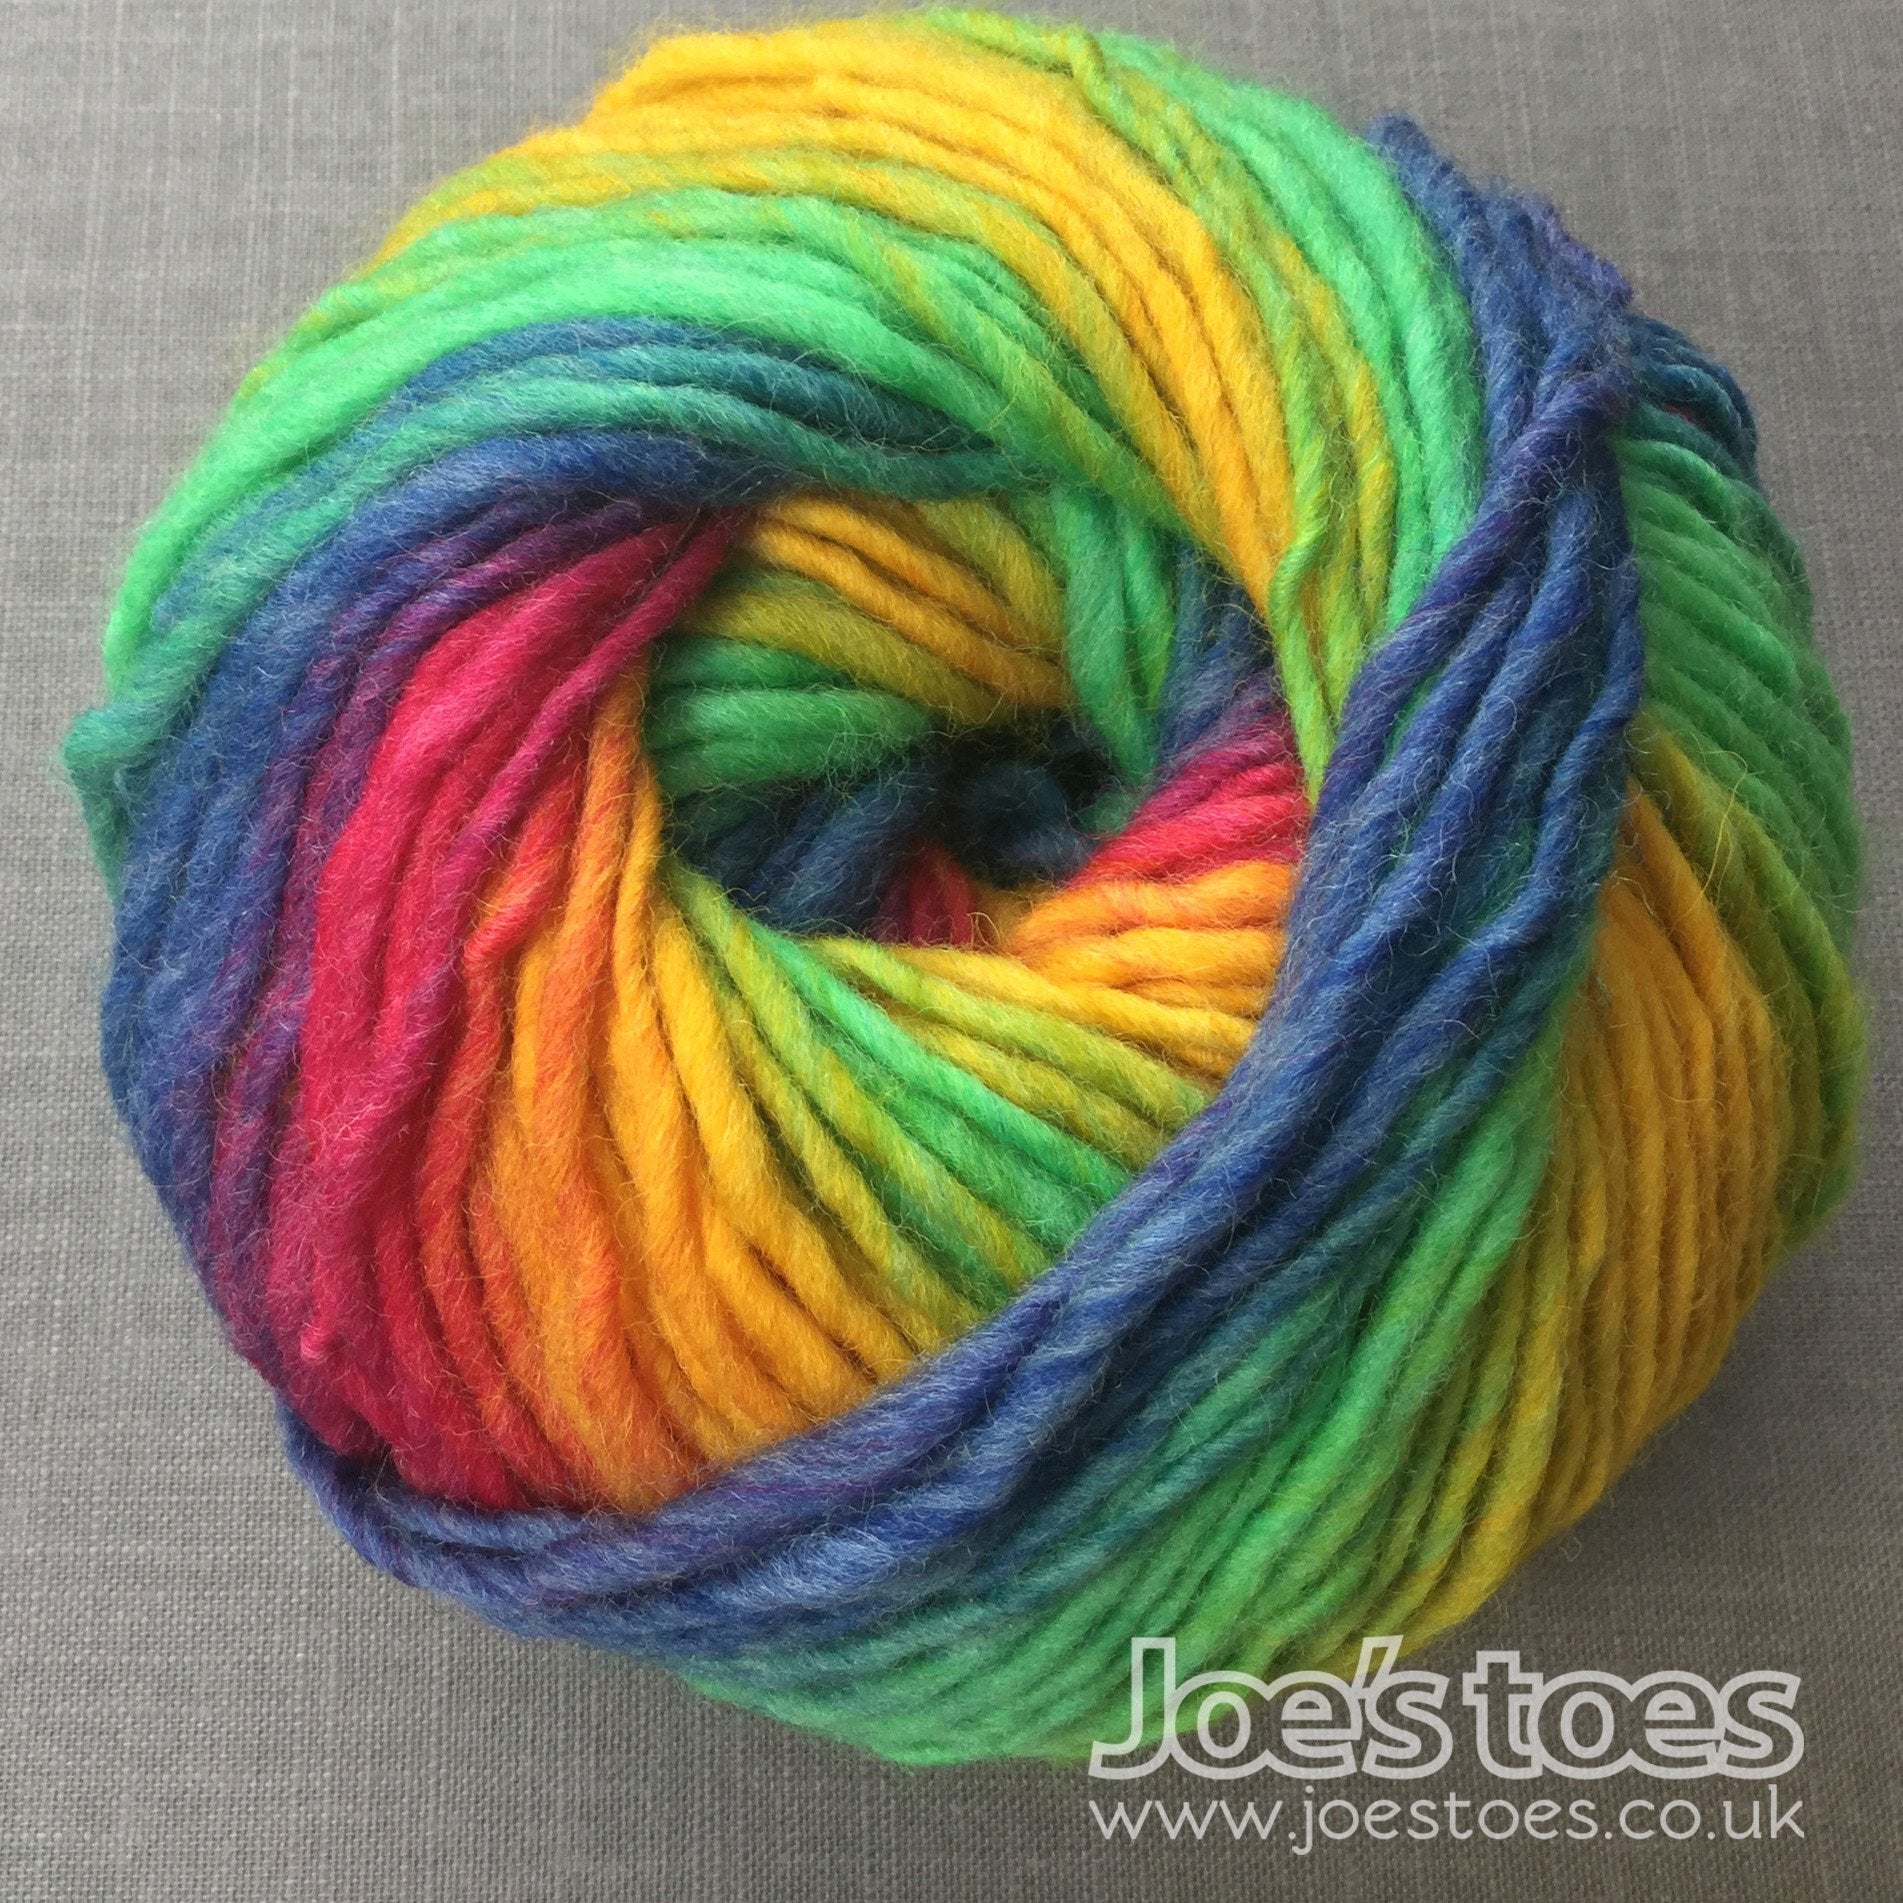 Sarah DIY Crochet Slippers in Rainbow Colored Yarn Women's 9-10 / Rainbow Yarn / Additional Vibram Rubber Outsoles